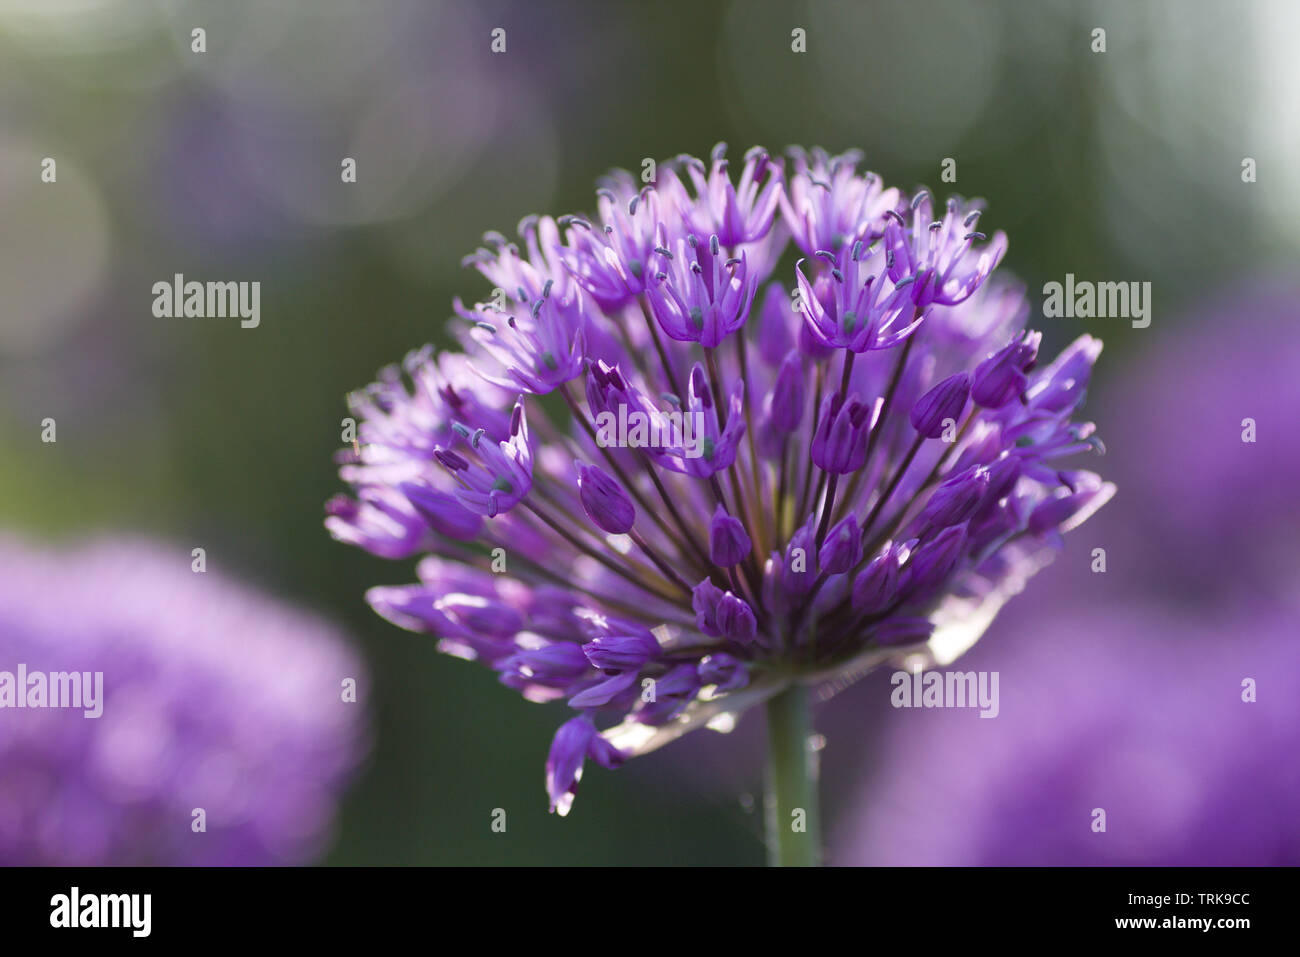 Purple backlit flower of Allium Stock Photo